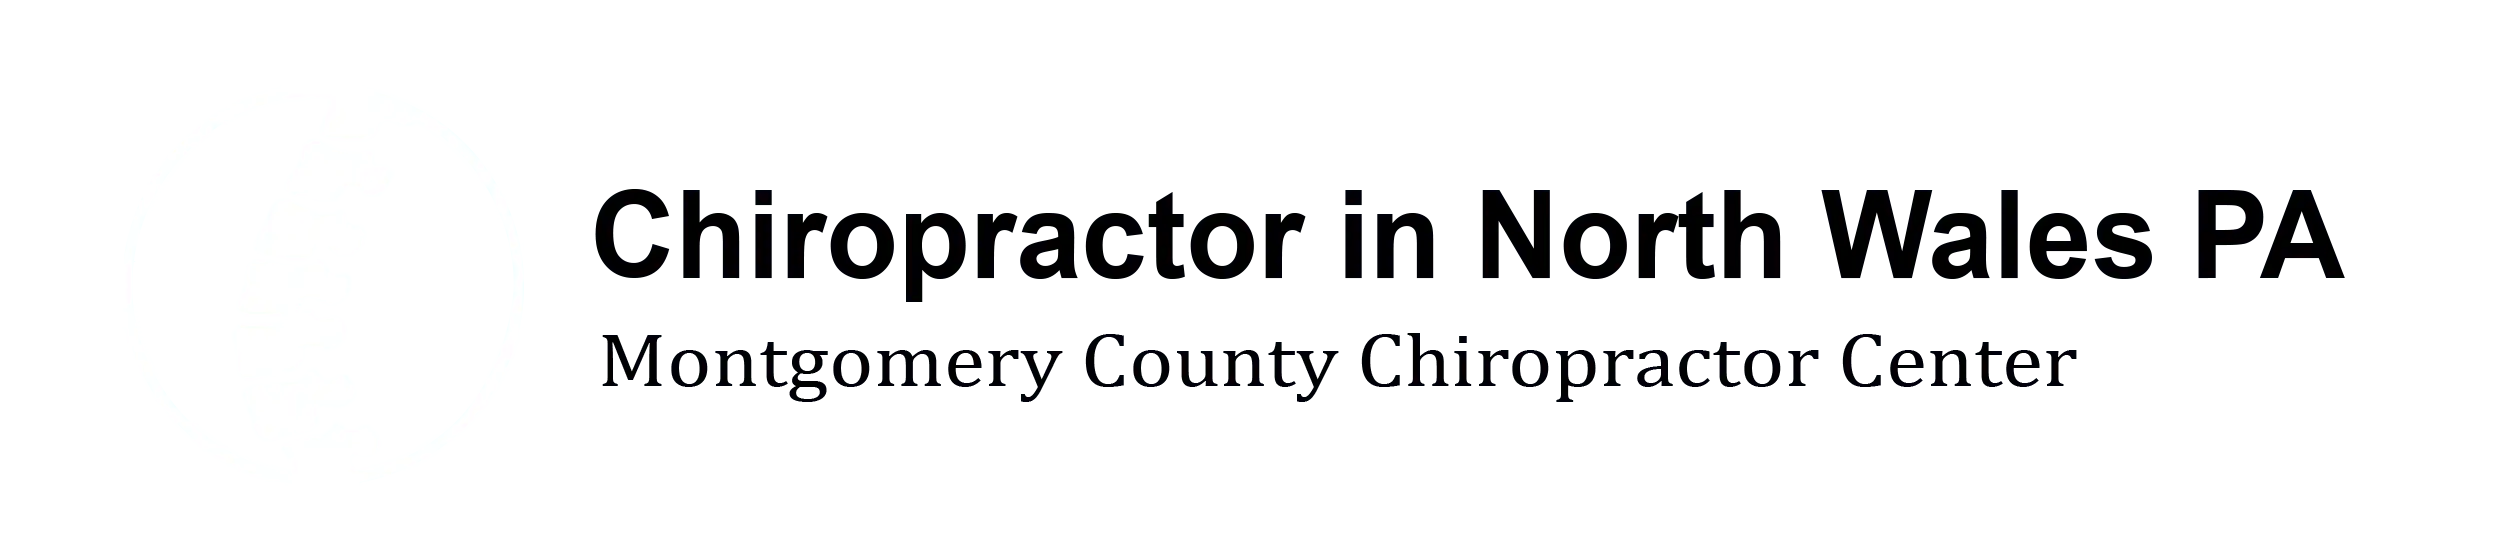 Montgomery County Chiropractor Center